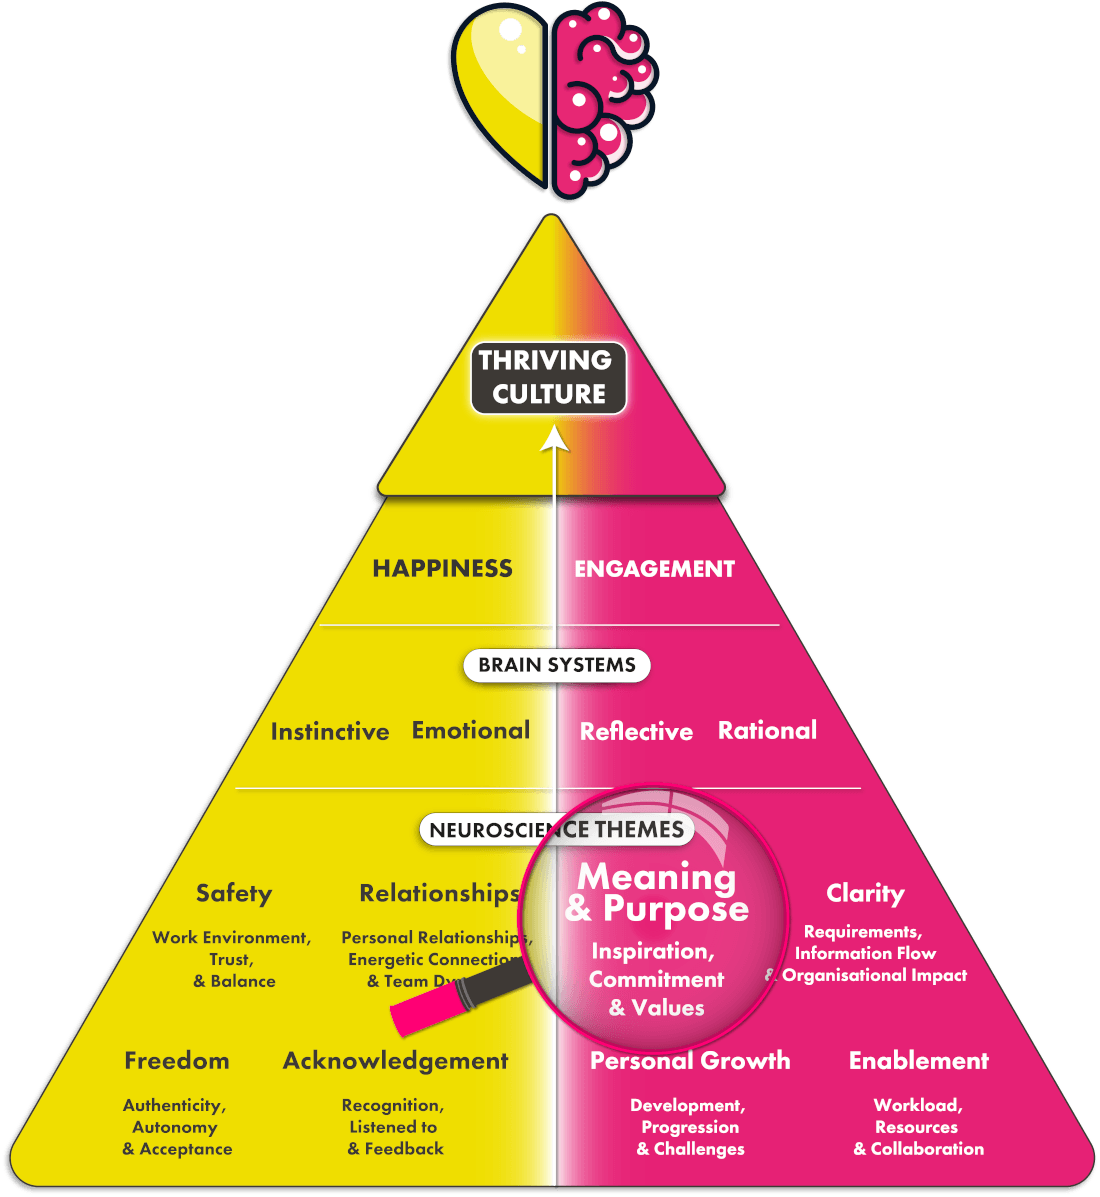 Meaning & purpose neuroscience theme on pyramid diagram